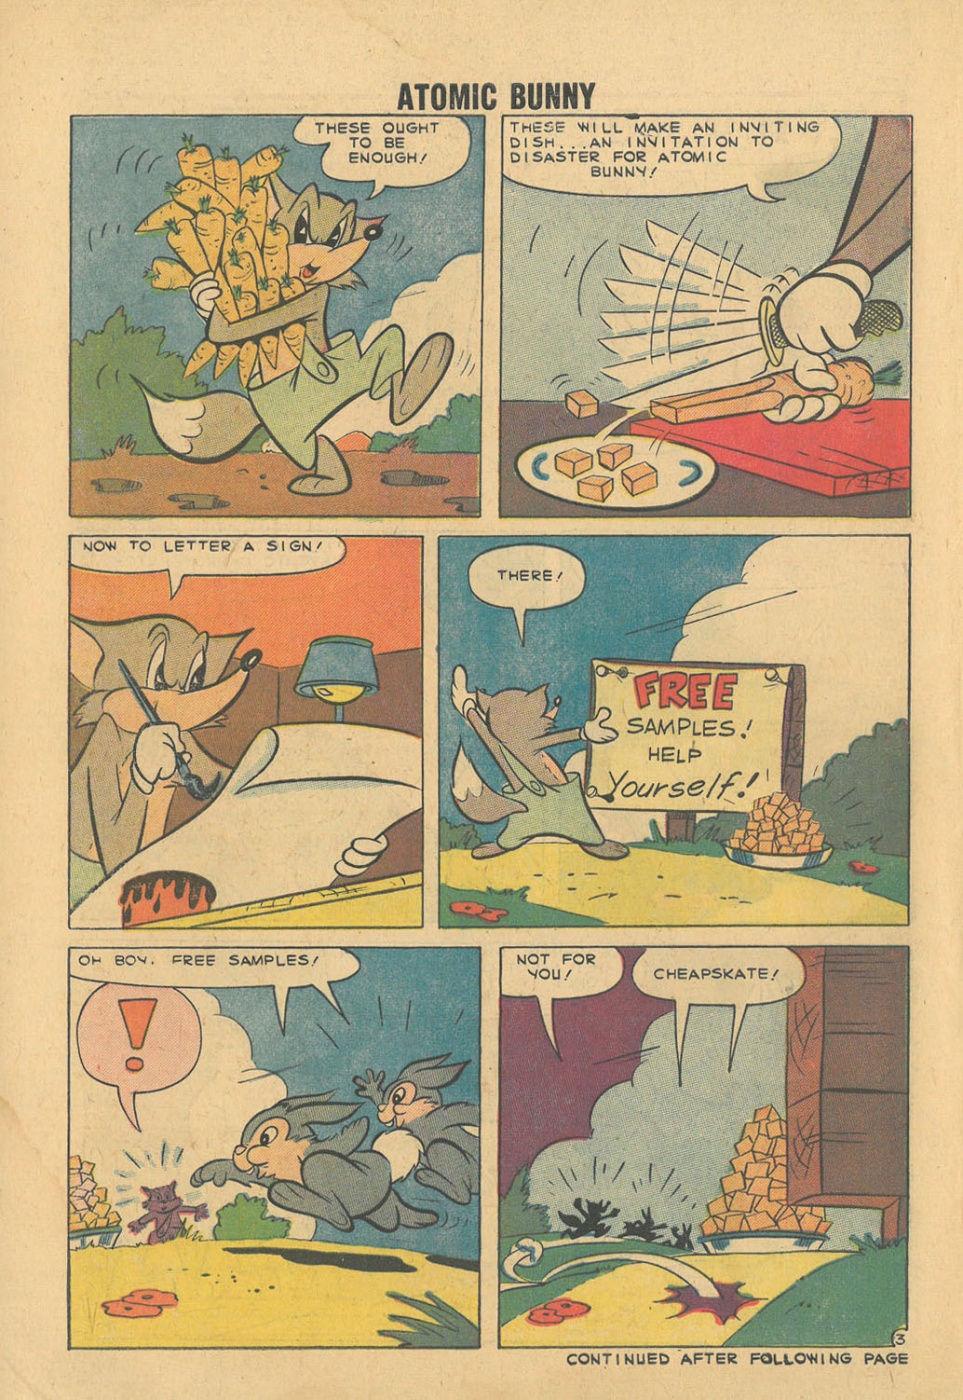 Atomic-Bunny-Comic-Strips (c) (29)